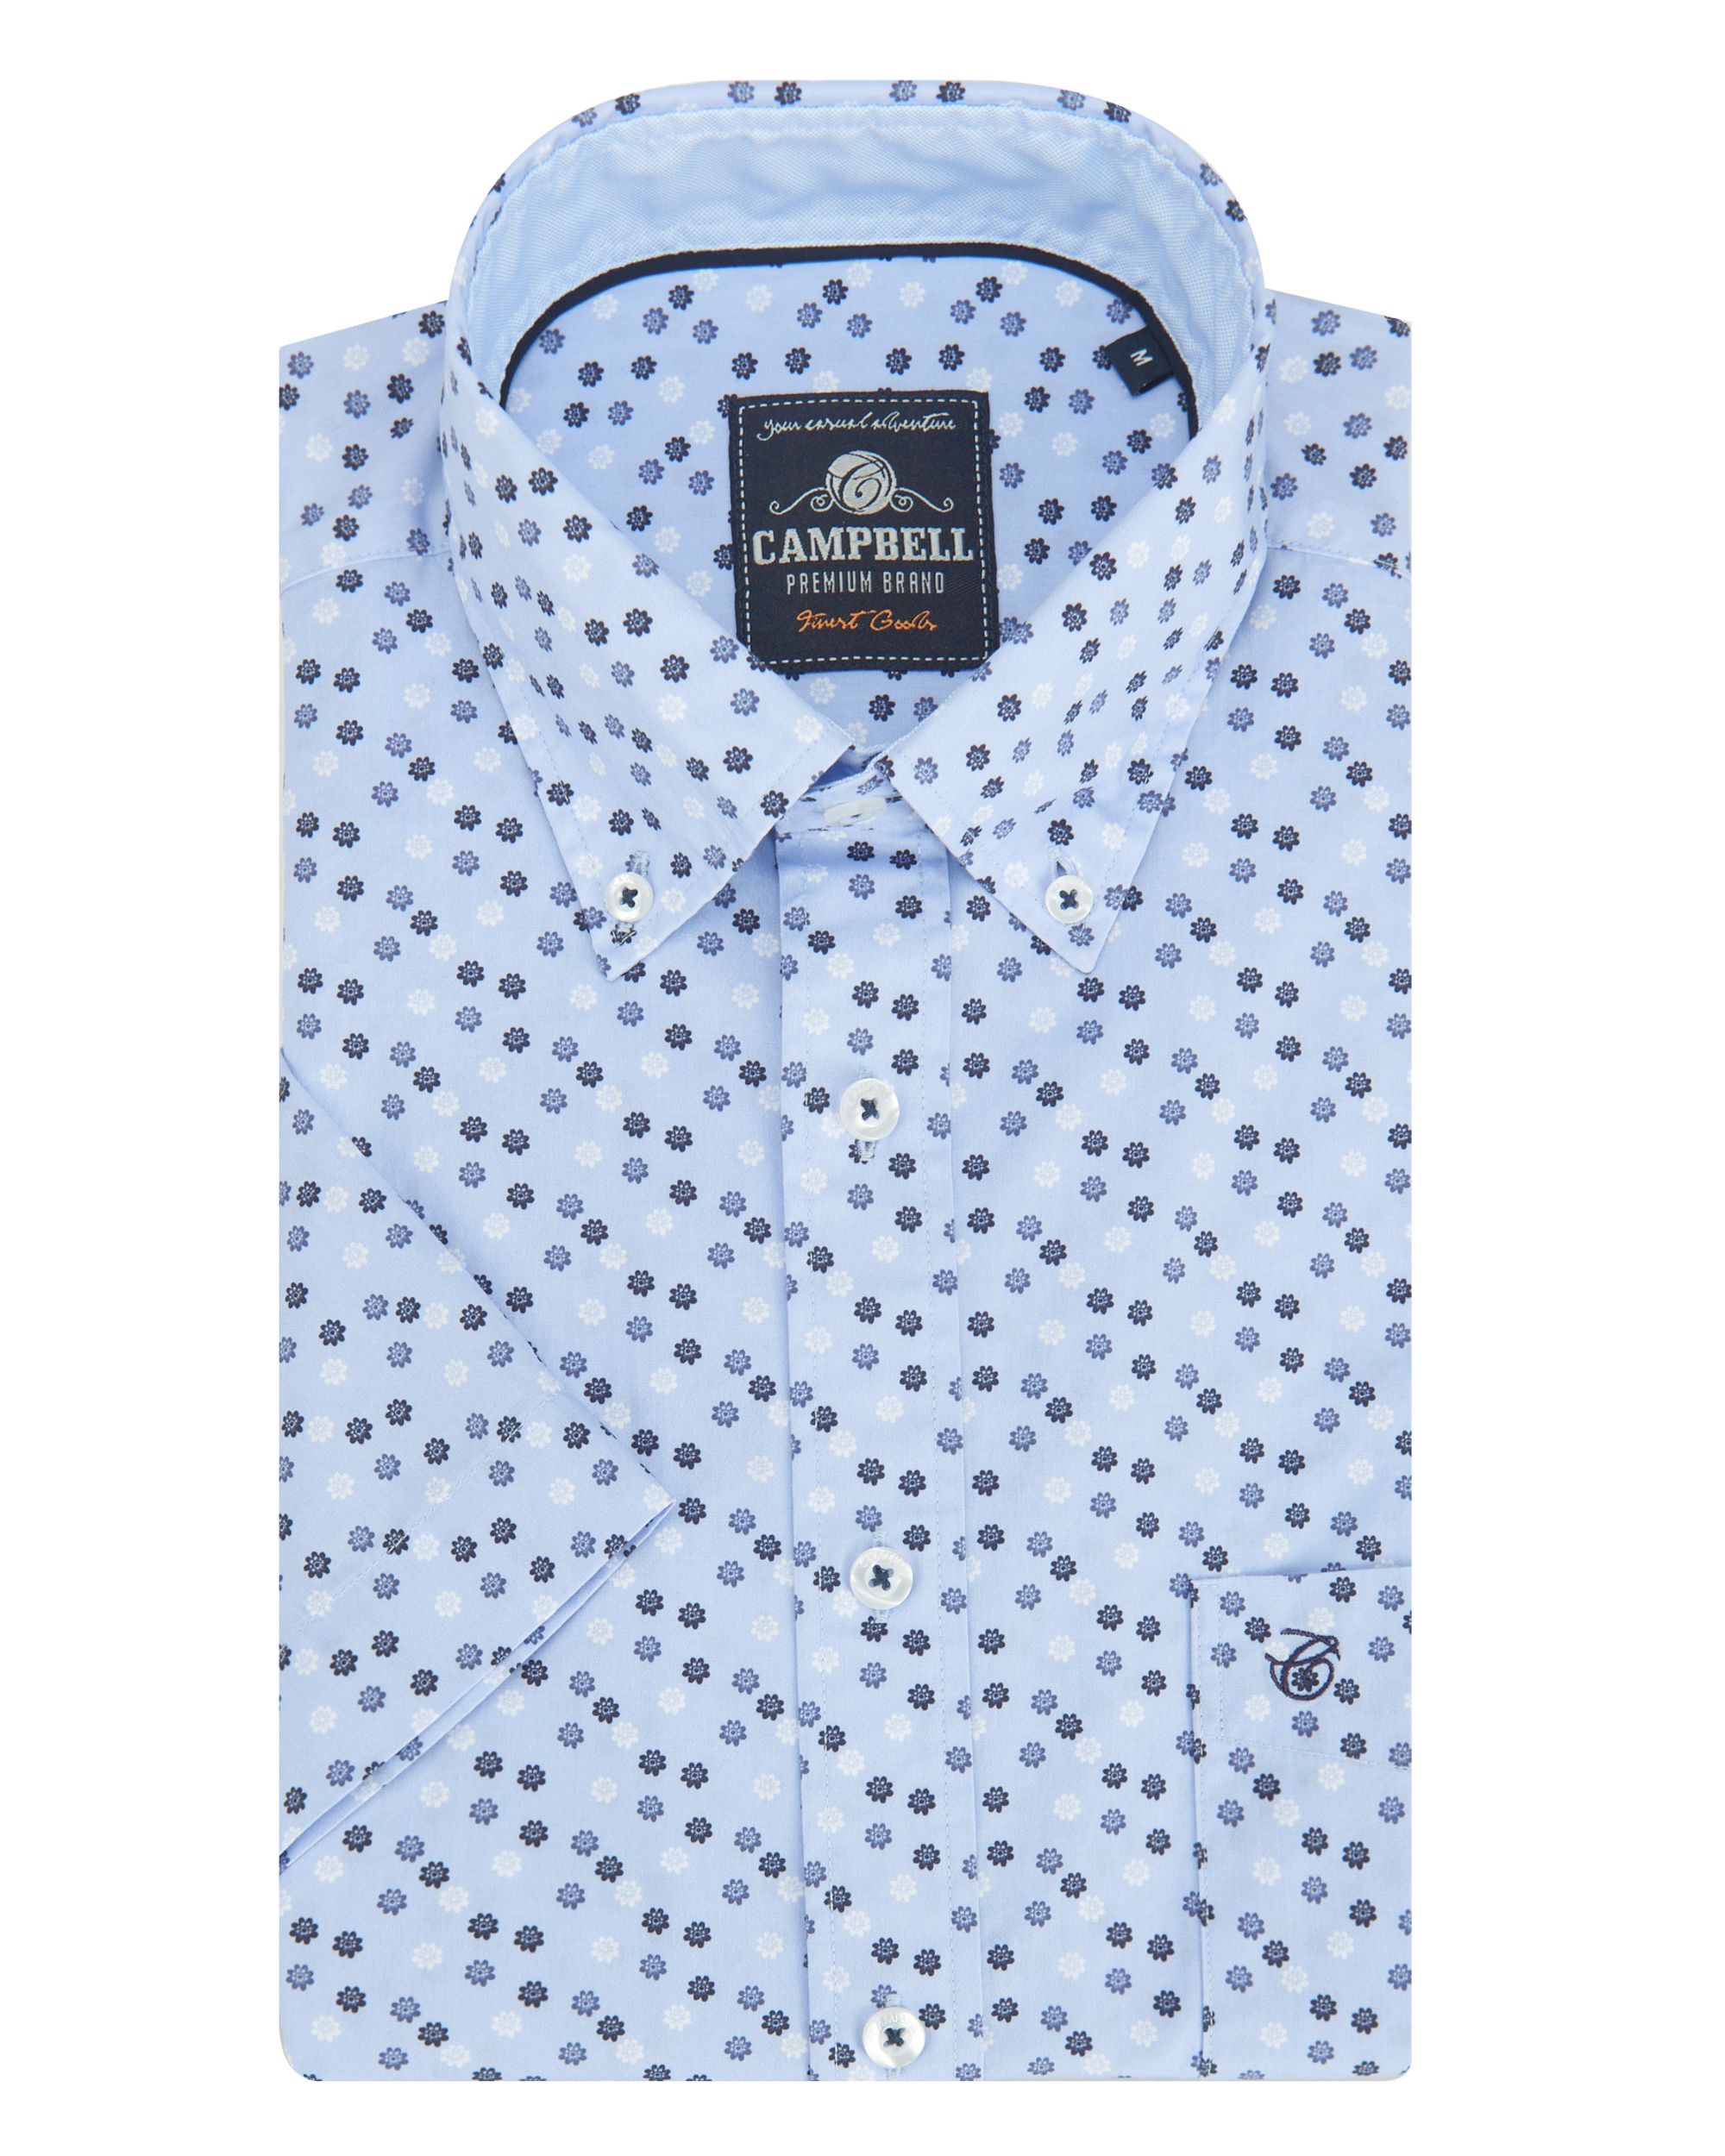 Campbell Classic Casual Overhemd KM Brunnera Blue dessin 089018-001-L